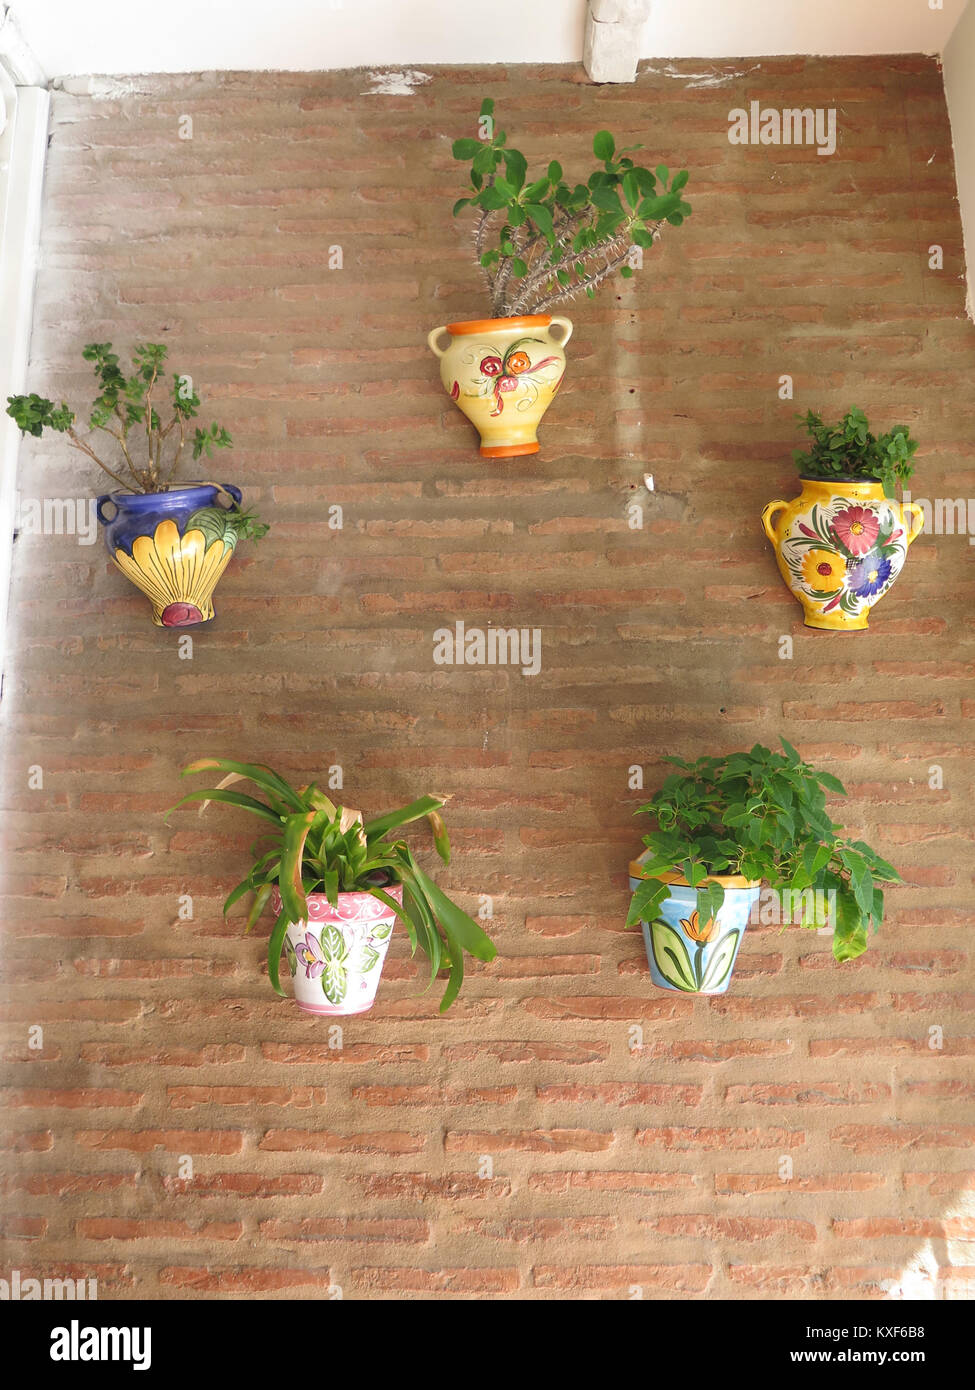 Andalusische Blumentöpfe aufhängen an Wand Stockfotografie - Alamy